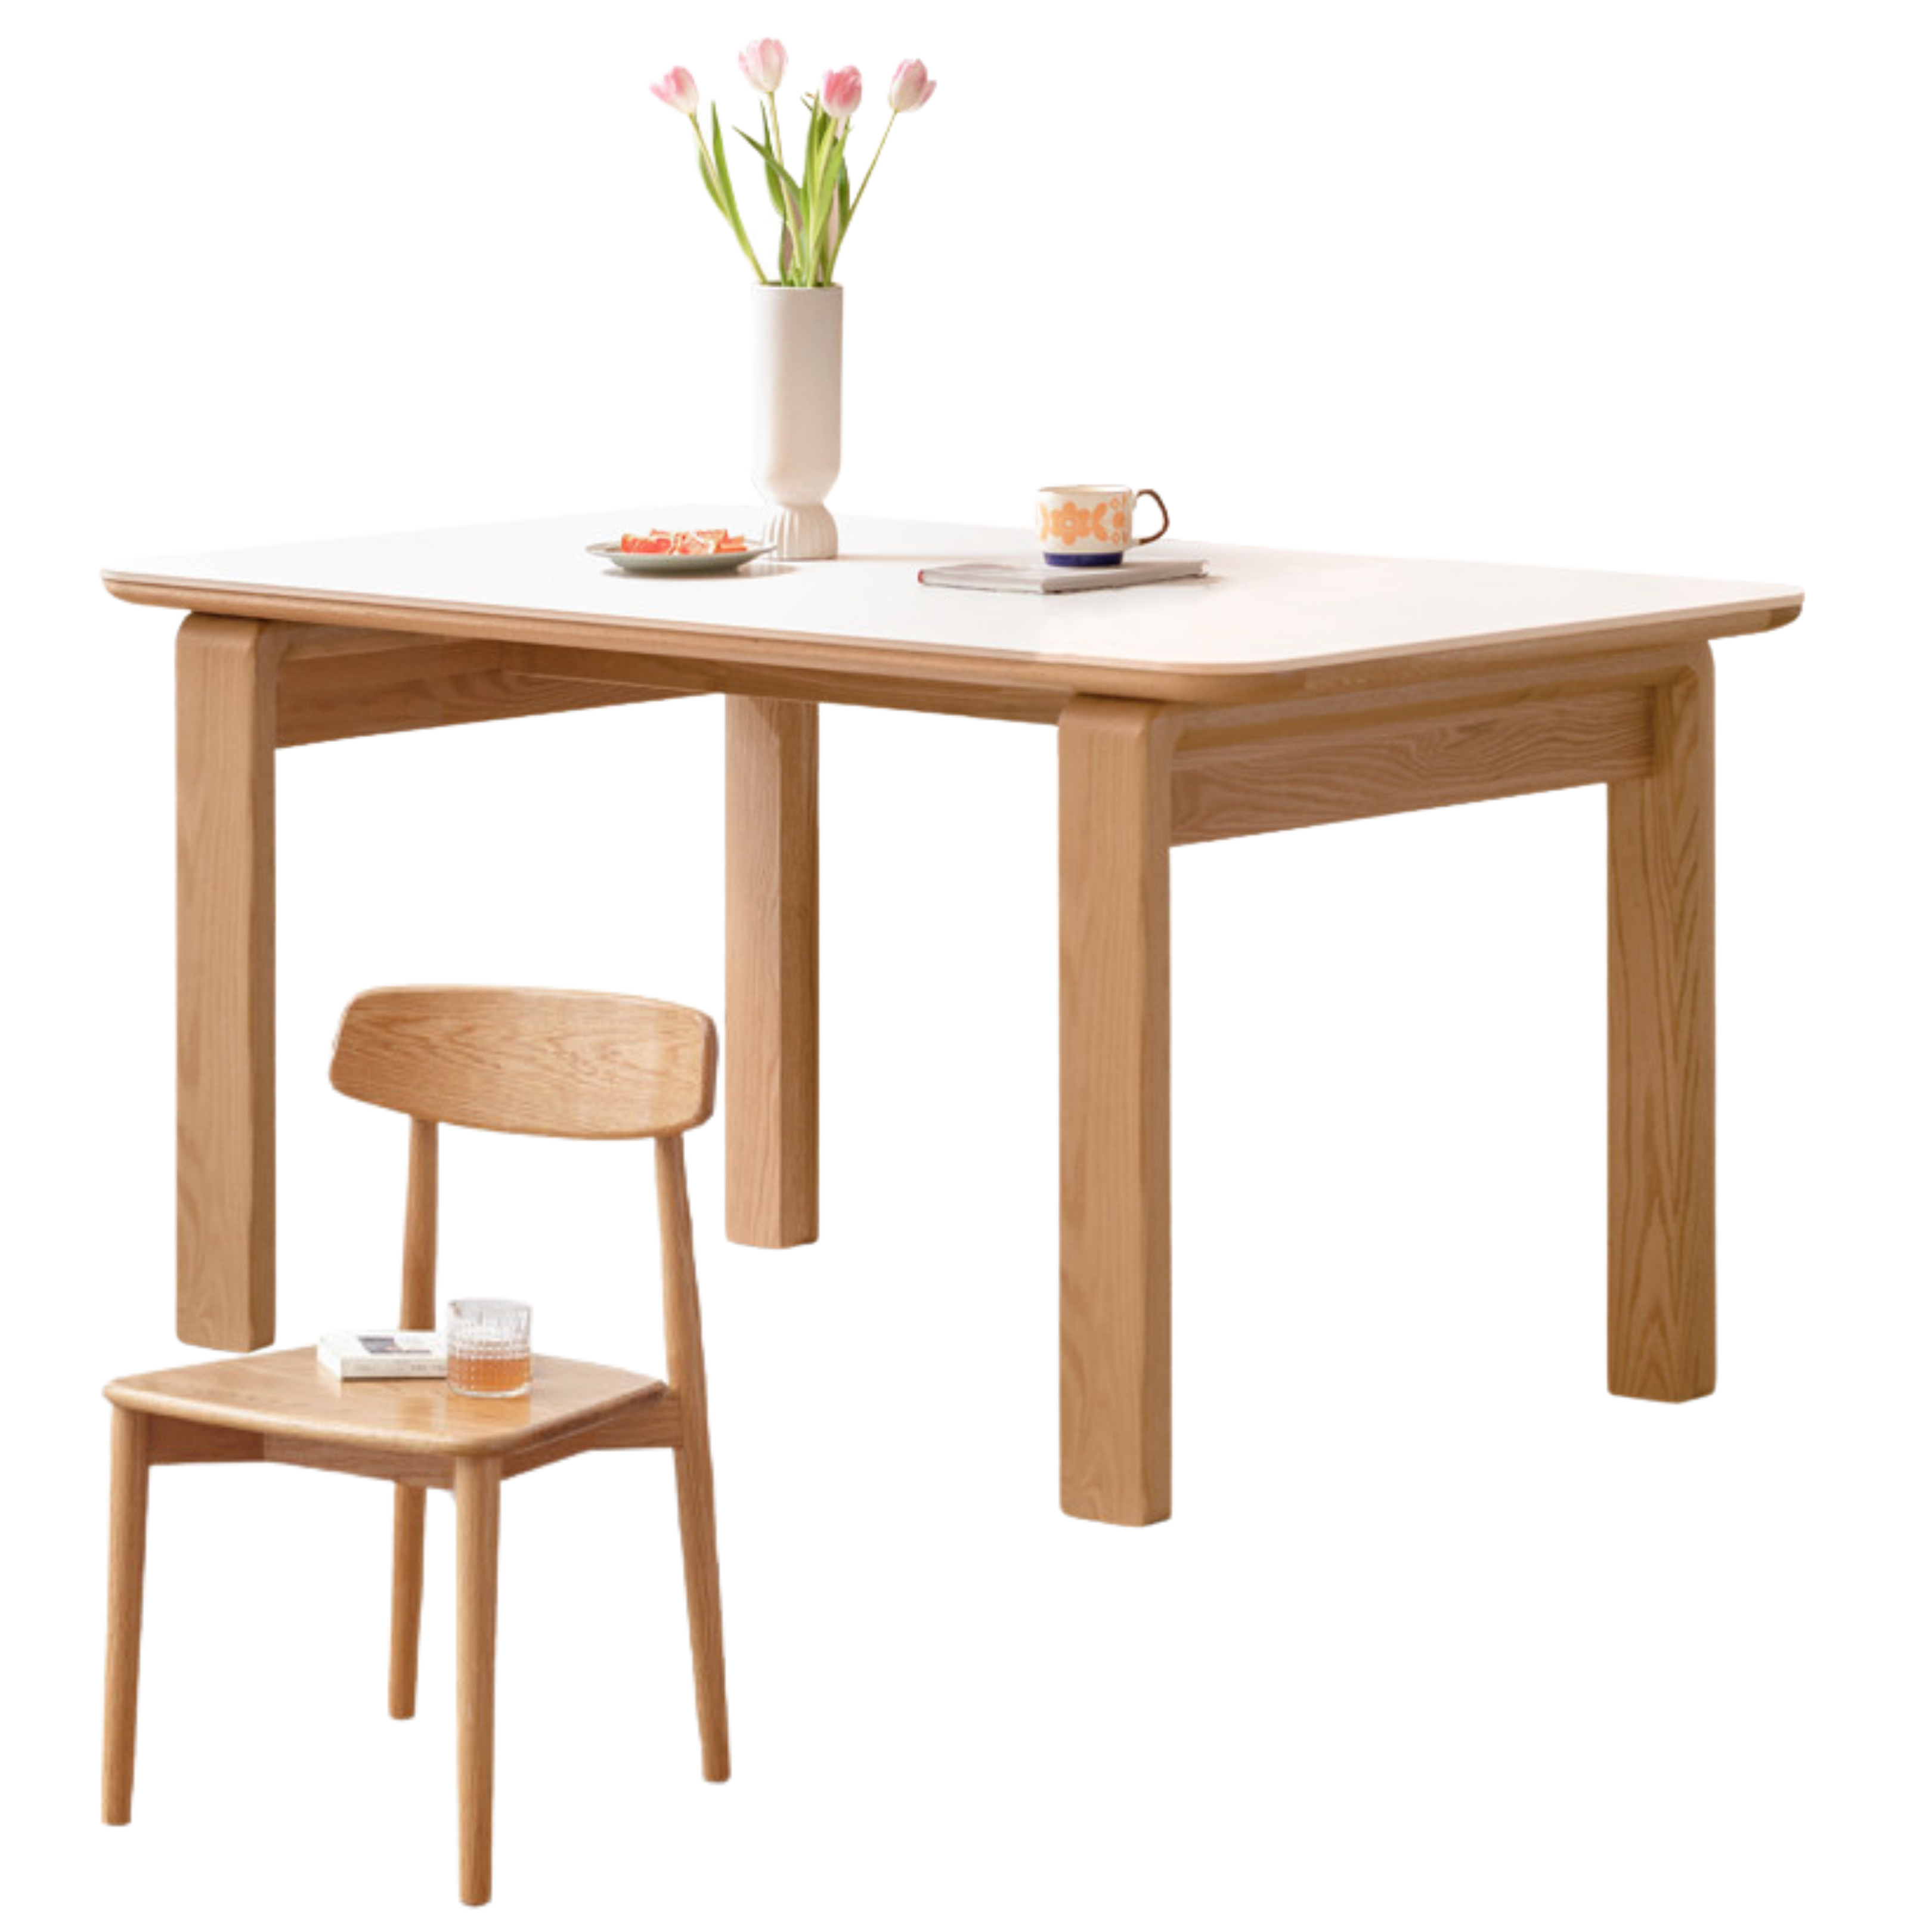 Oak solid wood Slate dining table